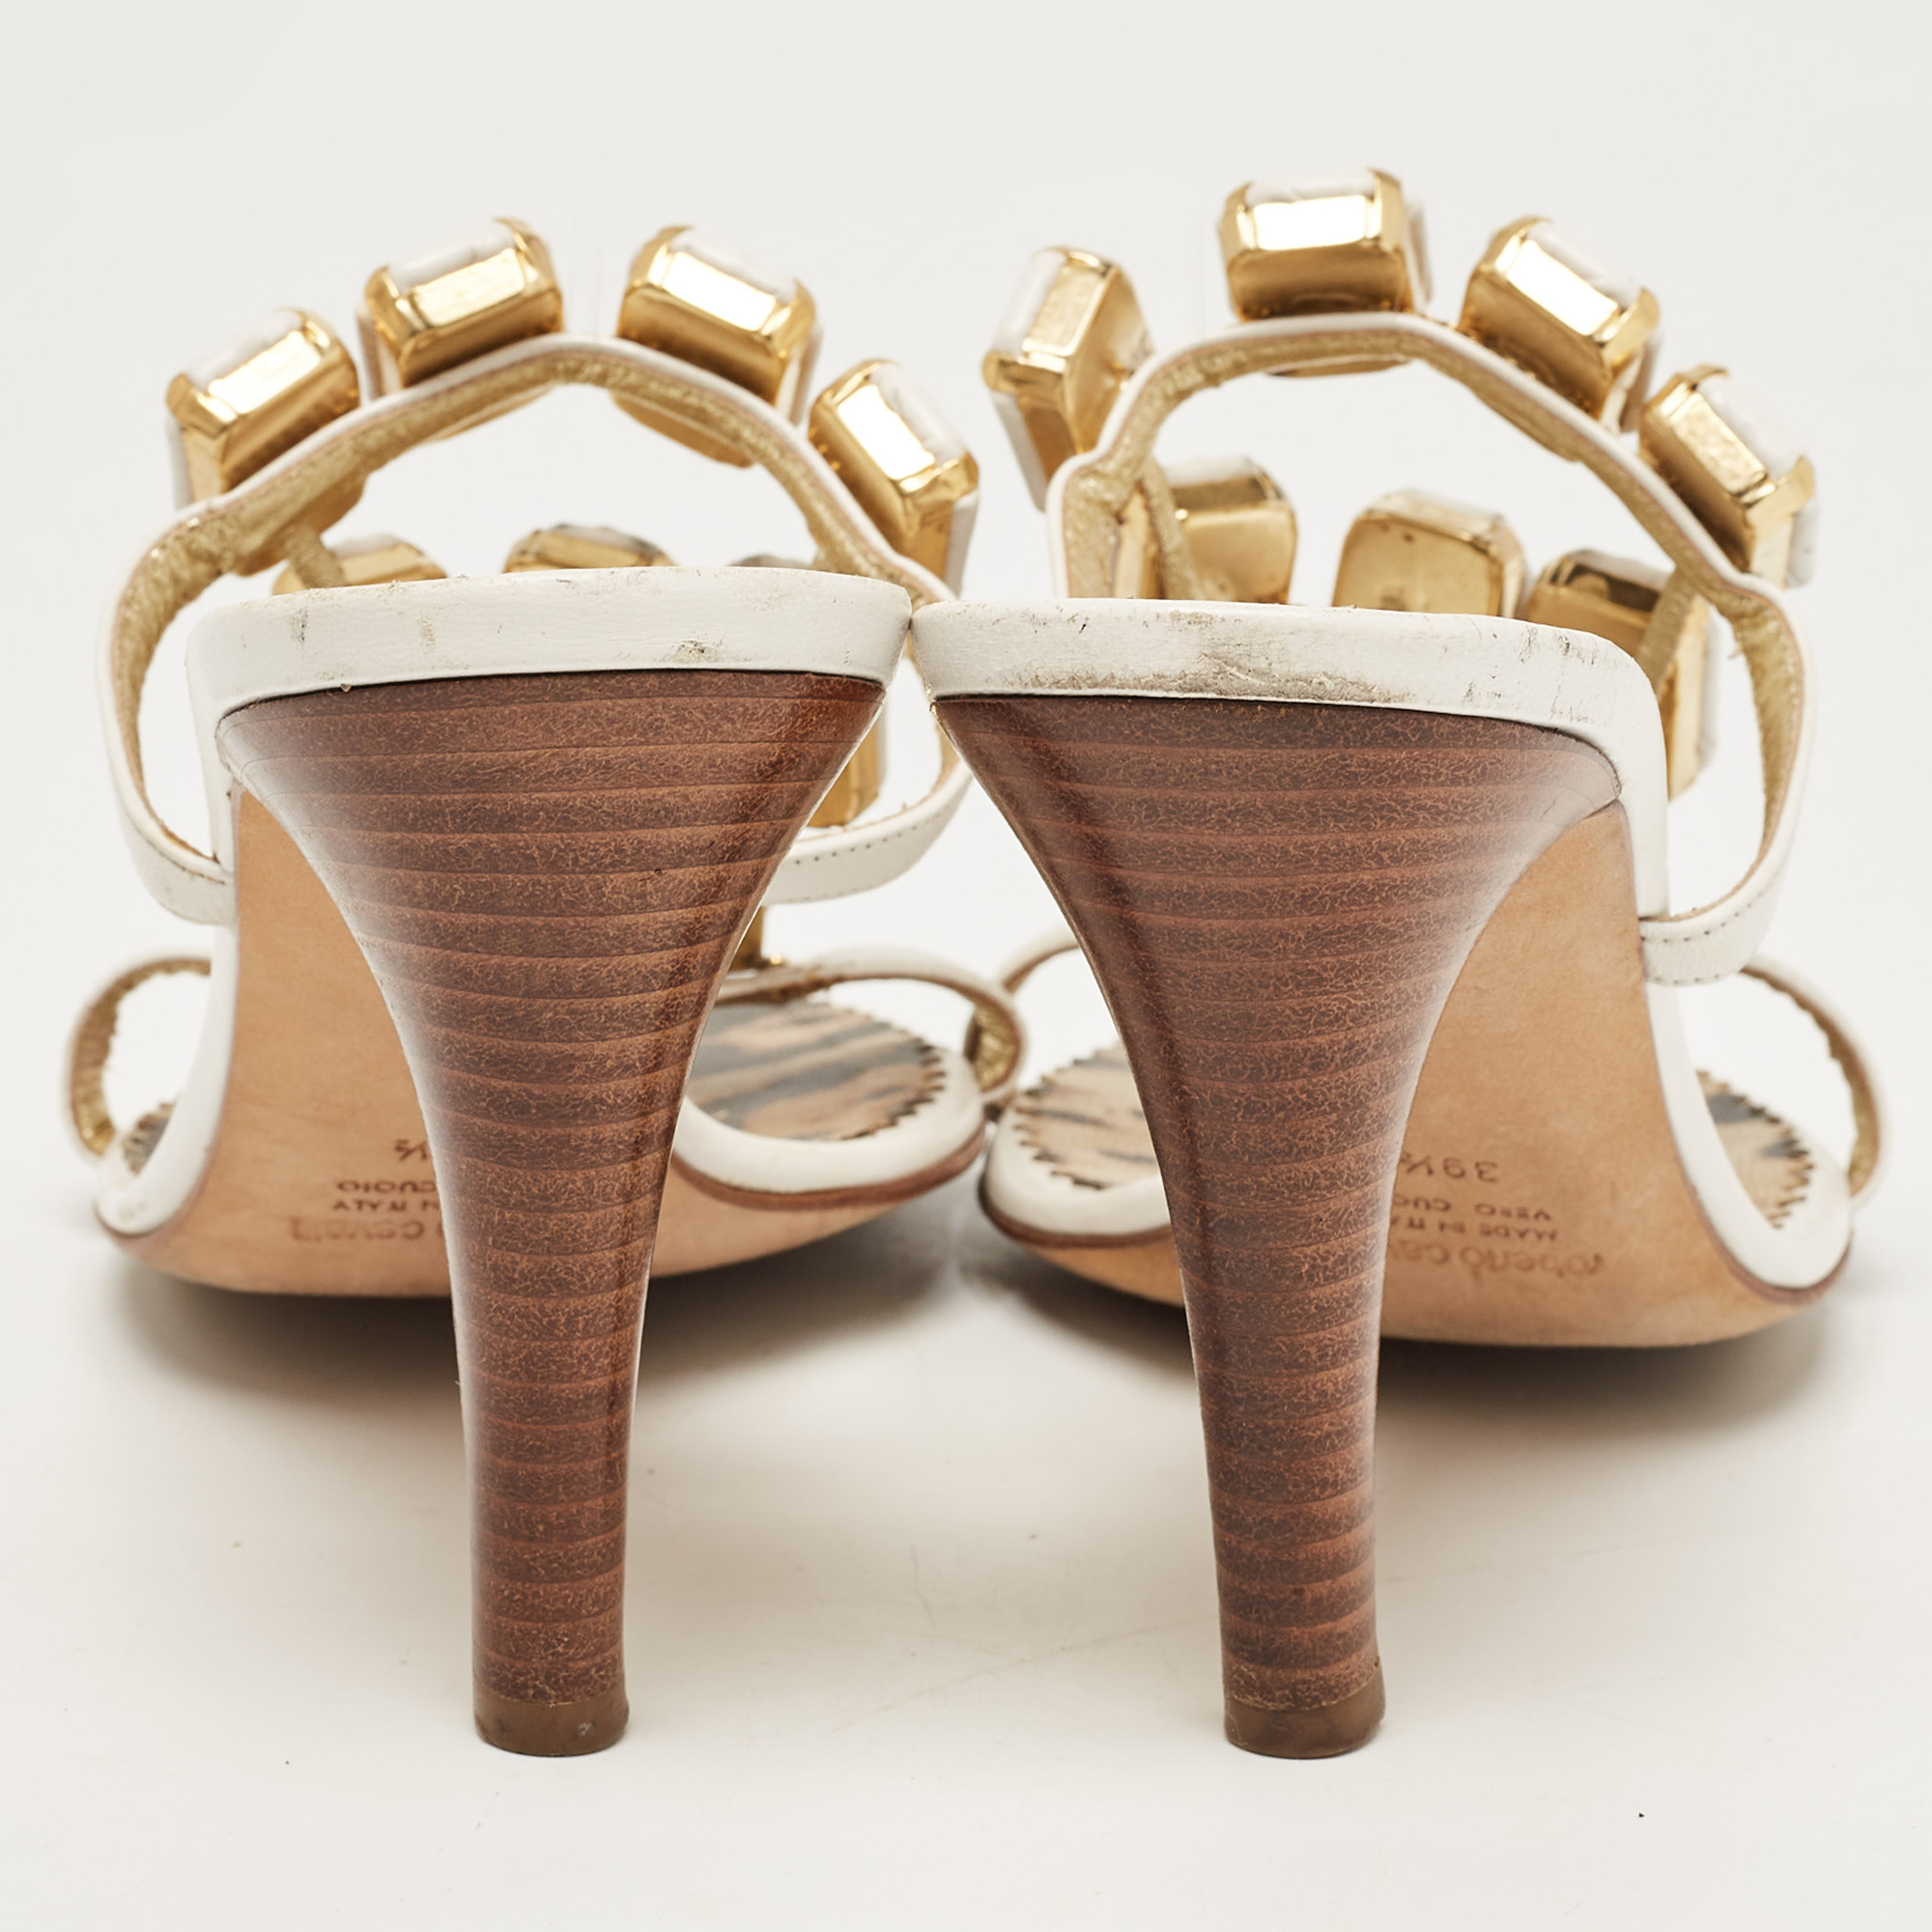 Roberto Cavalli White Leather Embellised Sandals Size 39.5